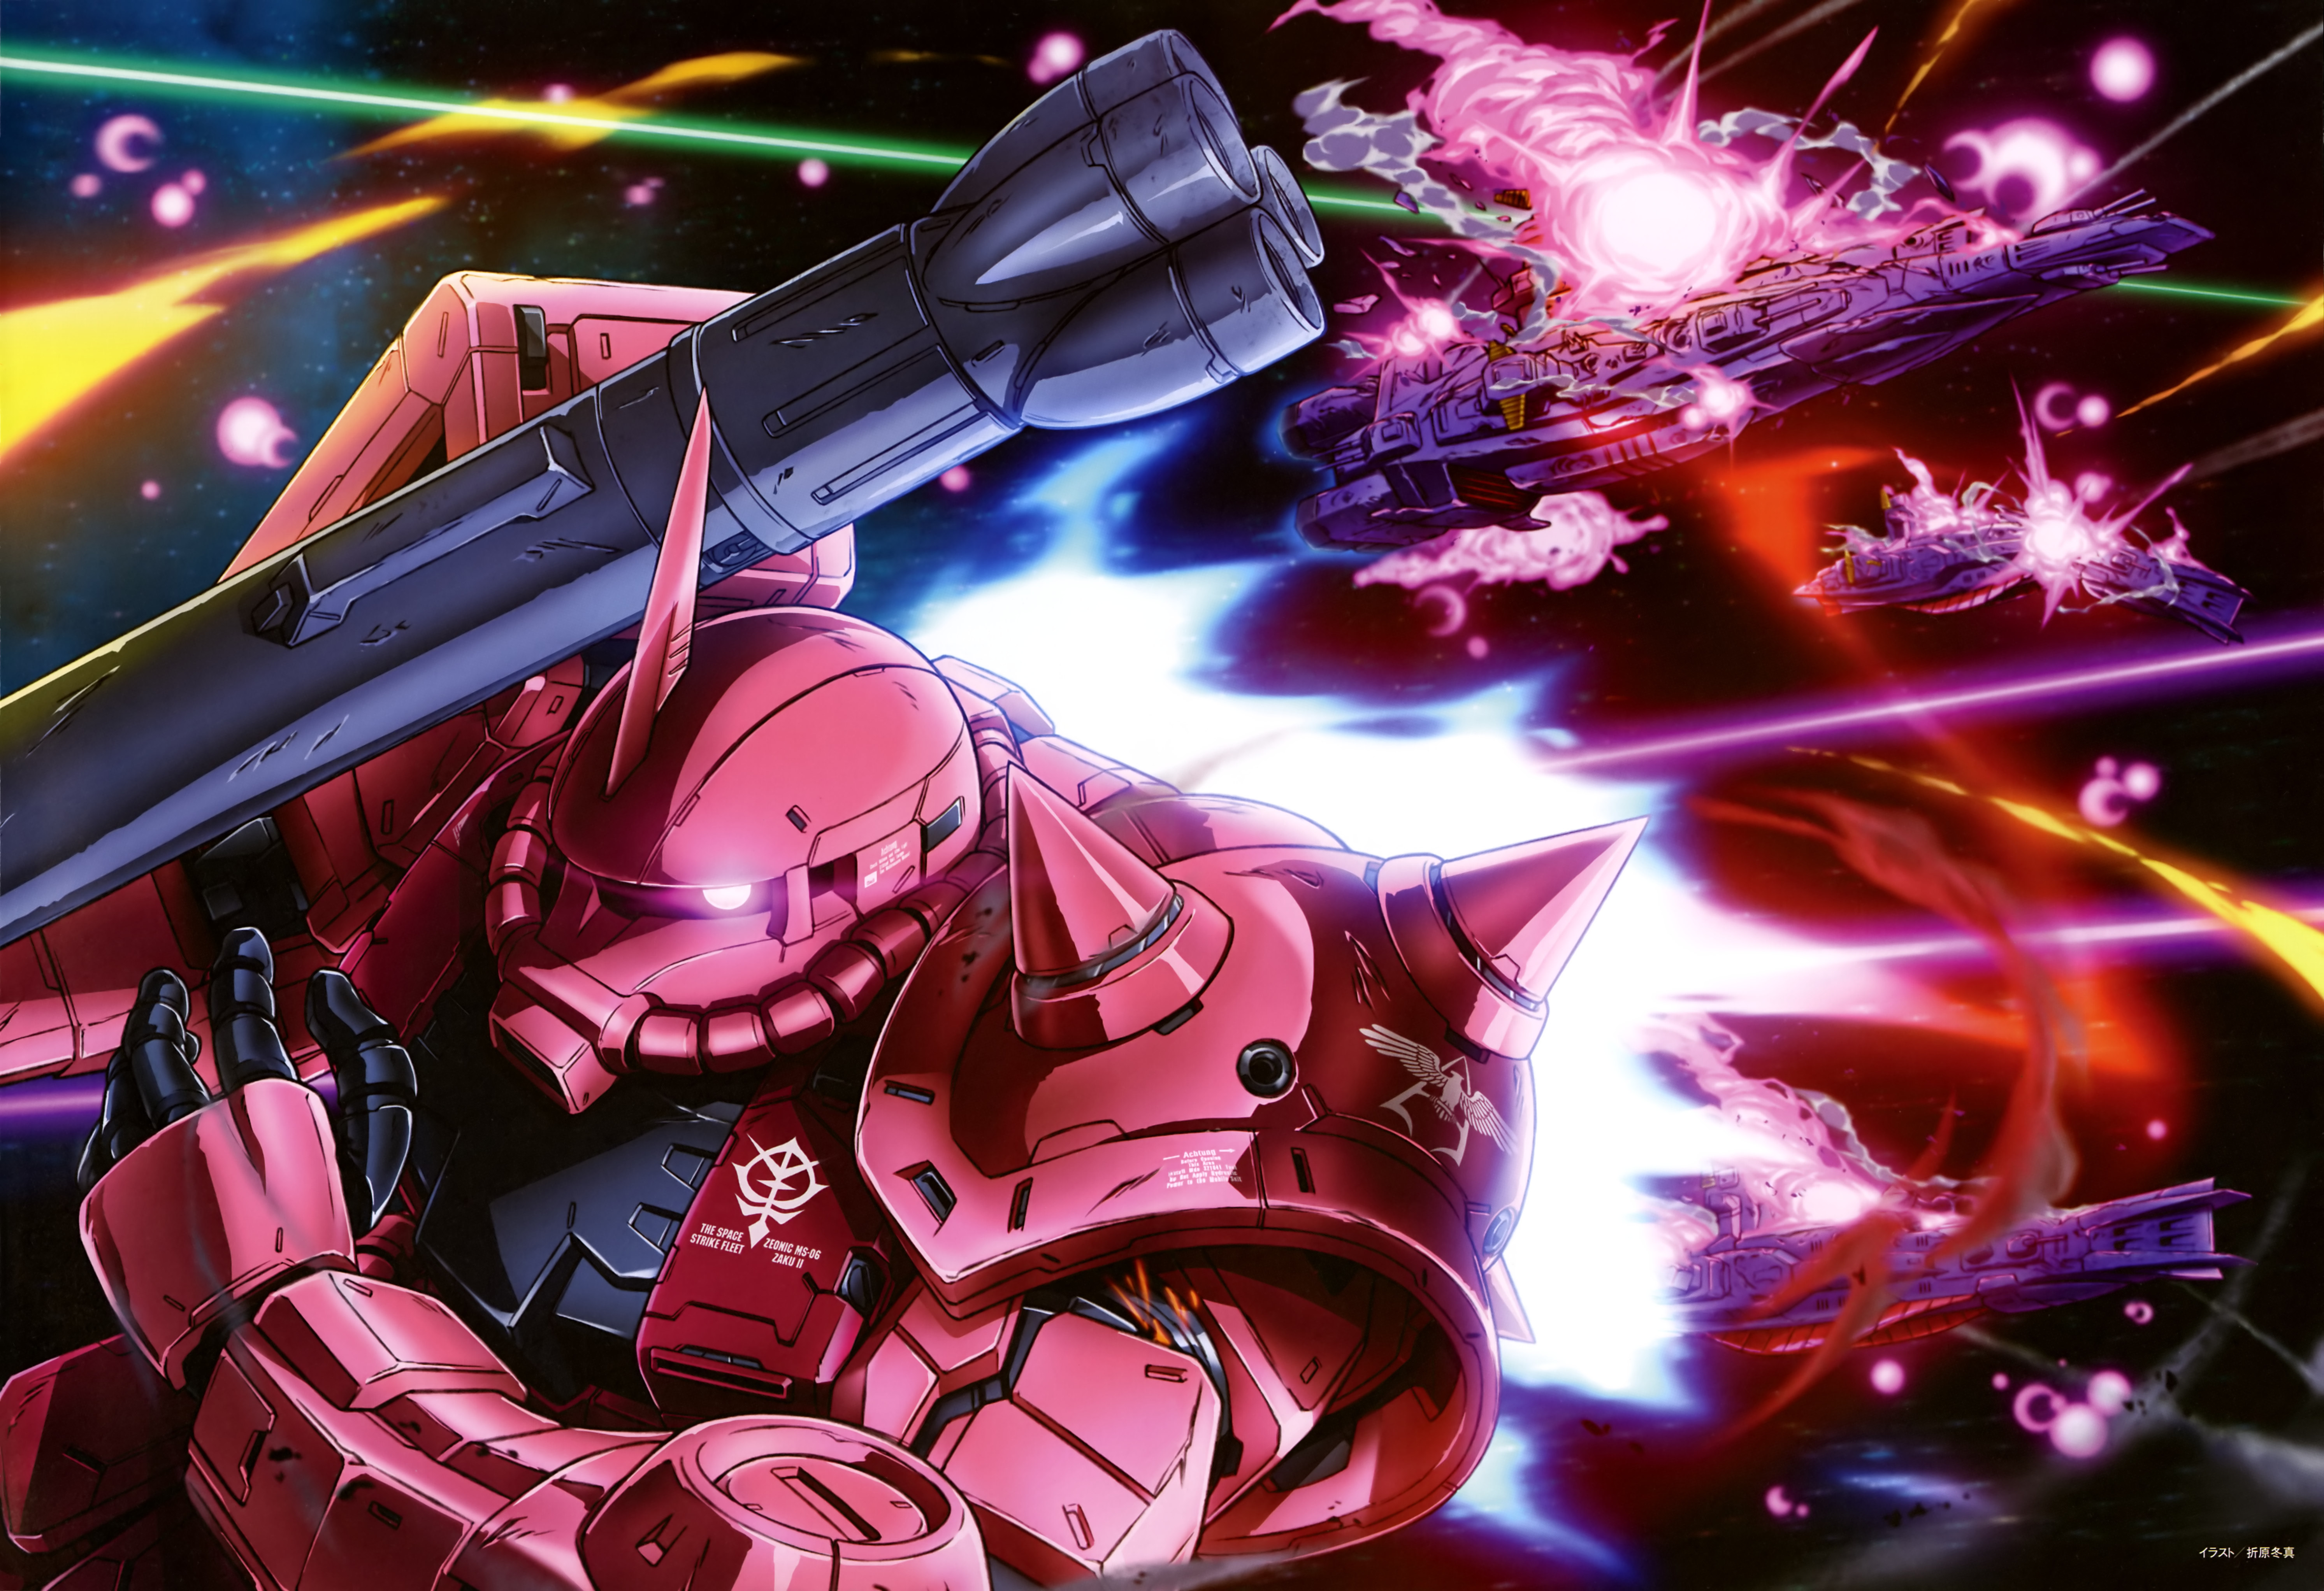 Anime 5971x4089 Zaku II Char's Custom Mobile Suit Mobile Suit Gundam anime mechs Super Robot Taisen artwork digital art fan art Principality of Zeon